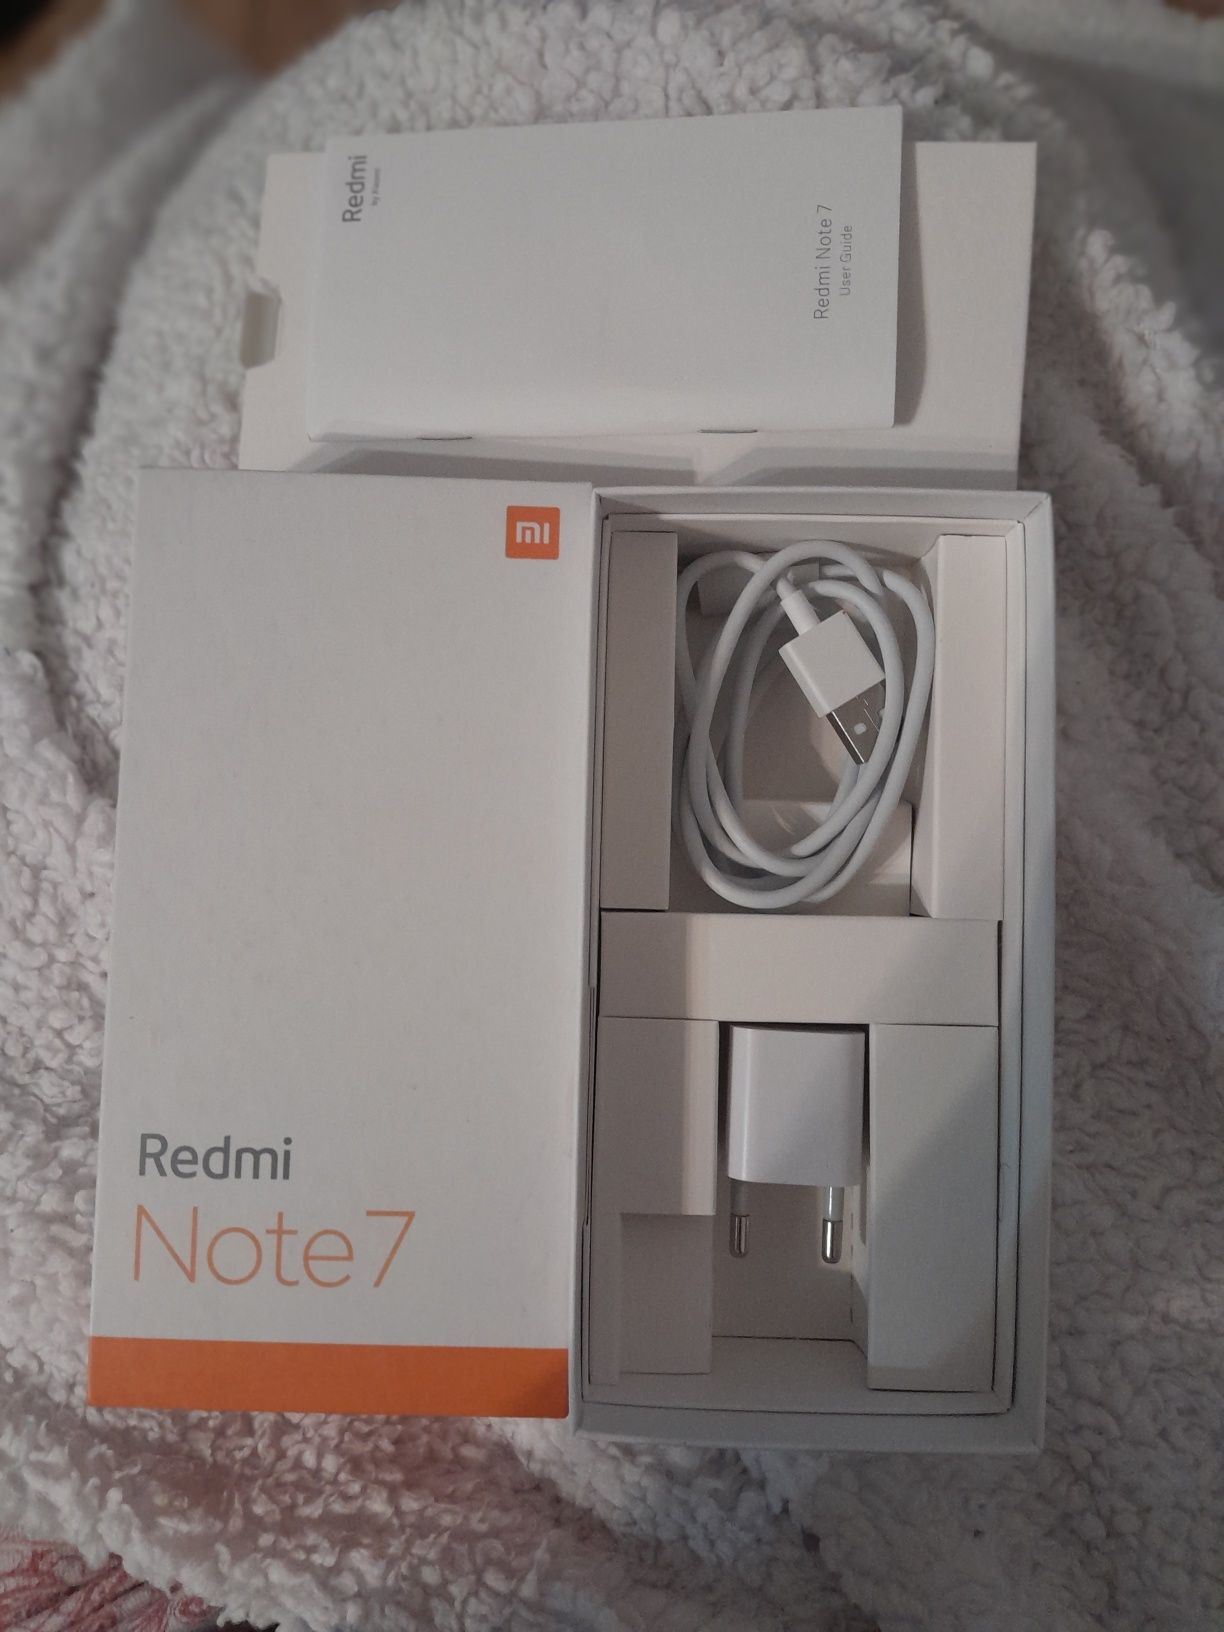 Redmi Note 7 by Xiaomi